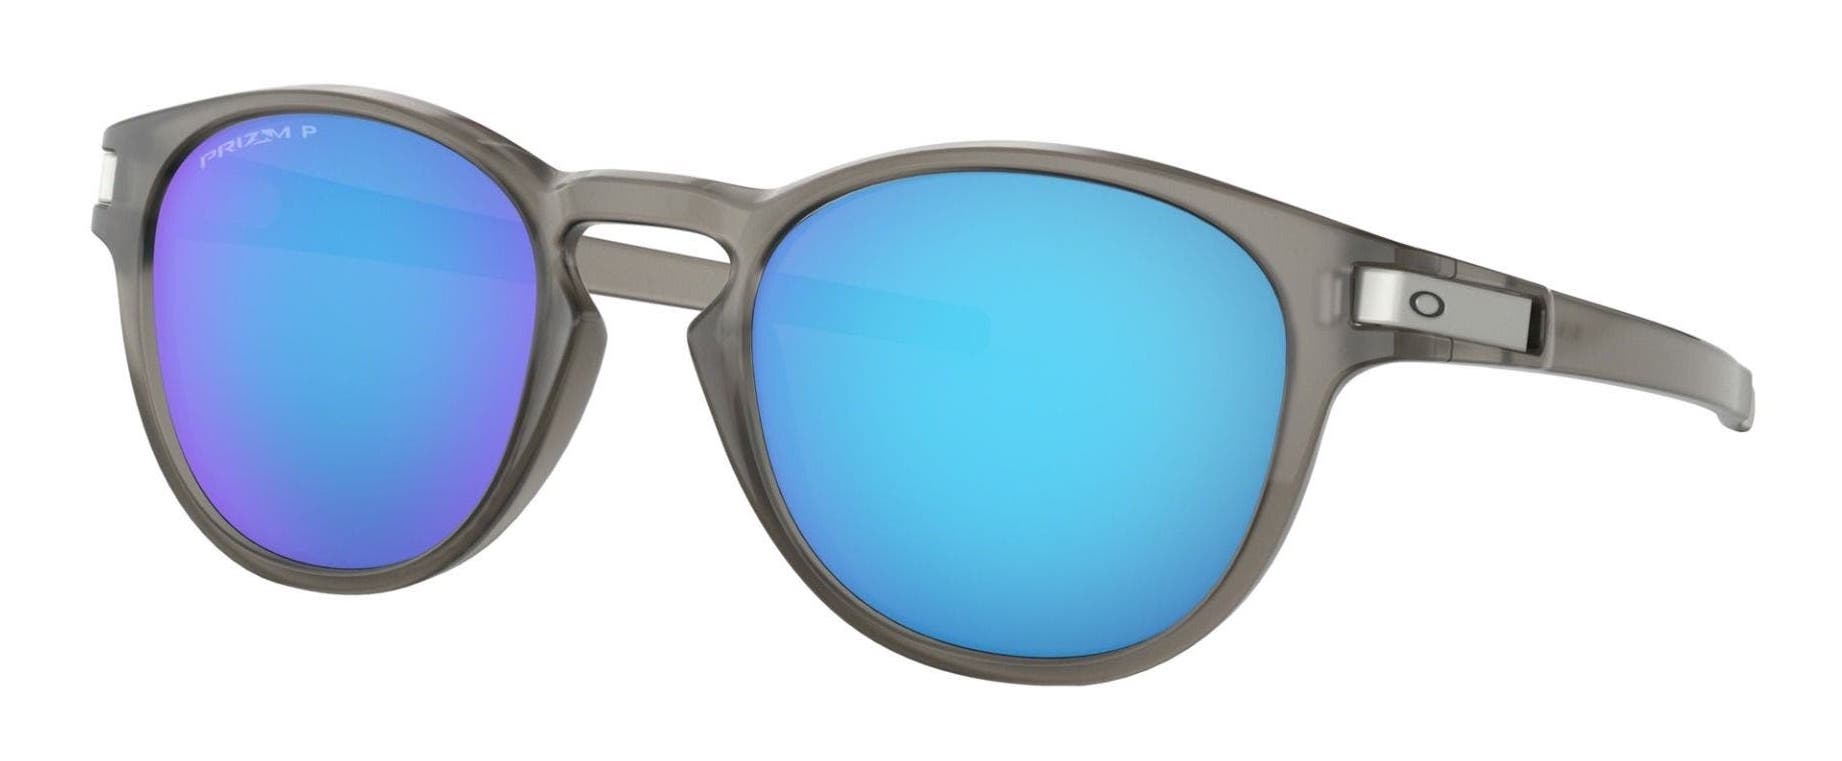 oakley latch polarized sunglasses in matte grey with blue mirror prizm polarized lenses